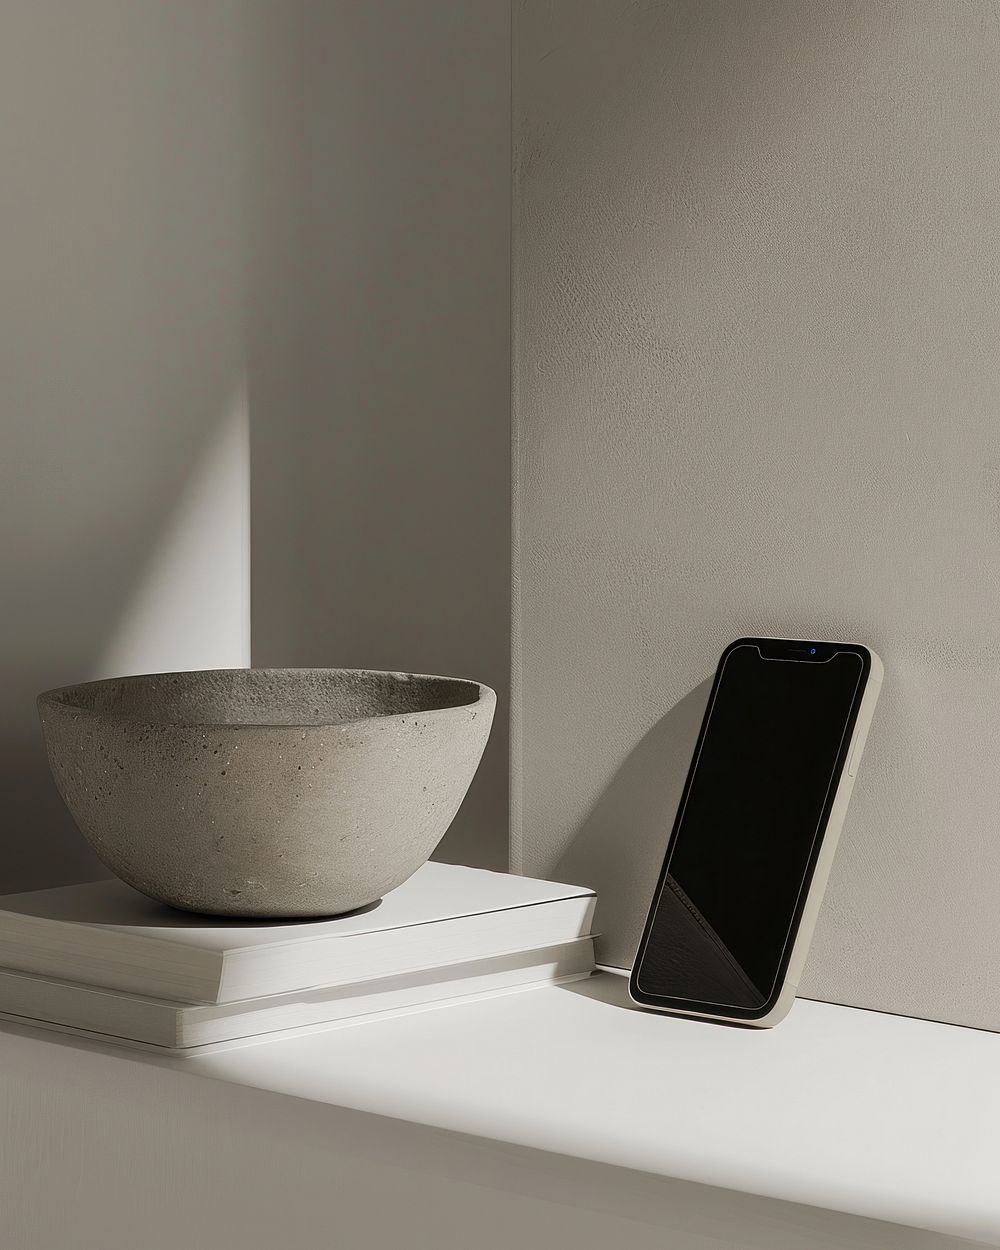 A phone mockup bowl electronics windowsill.